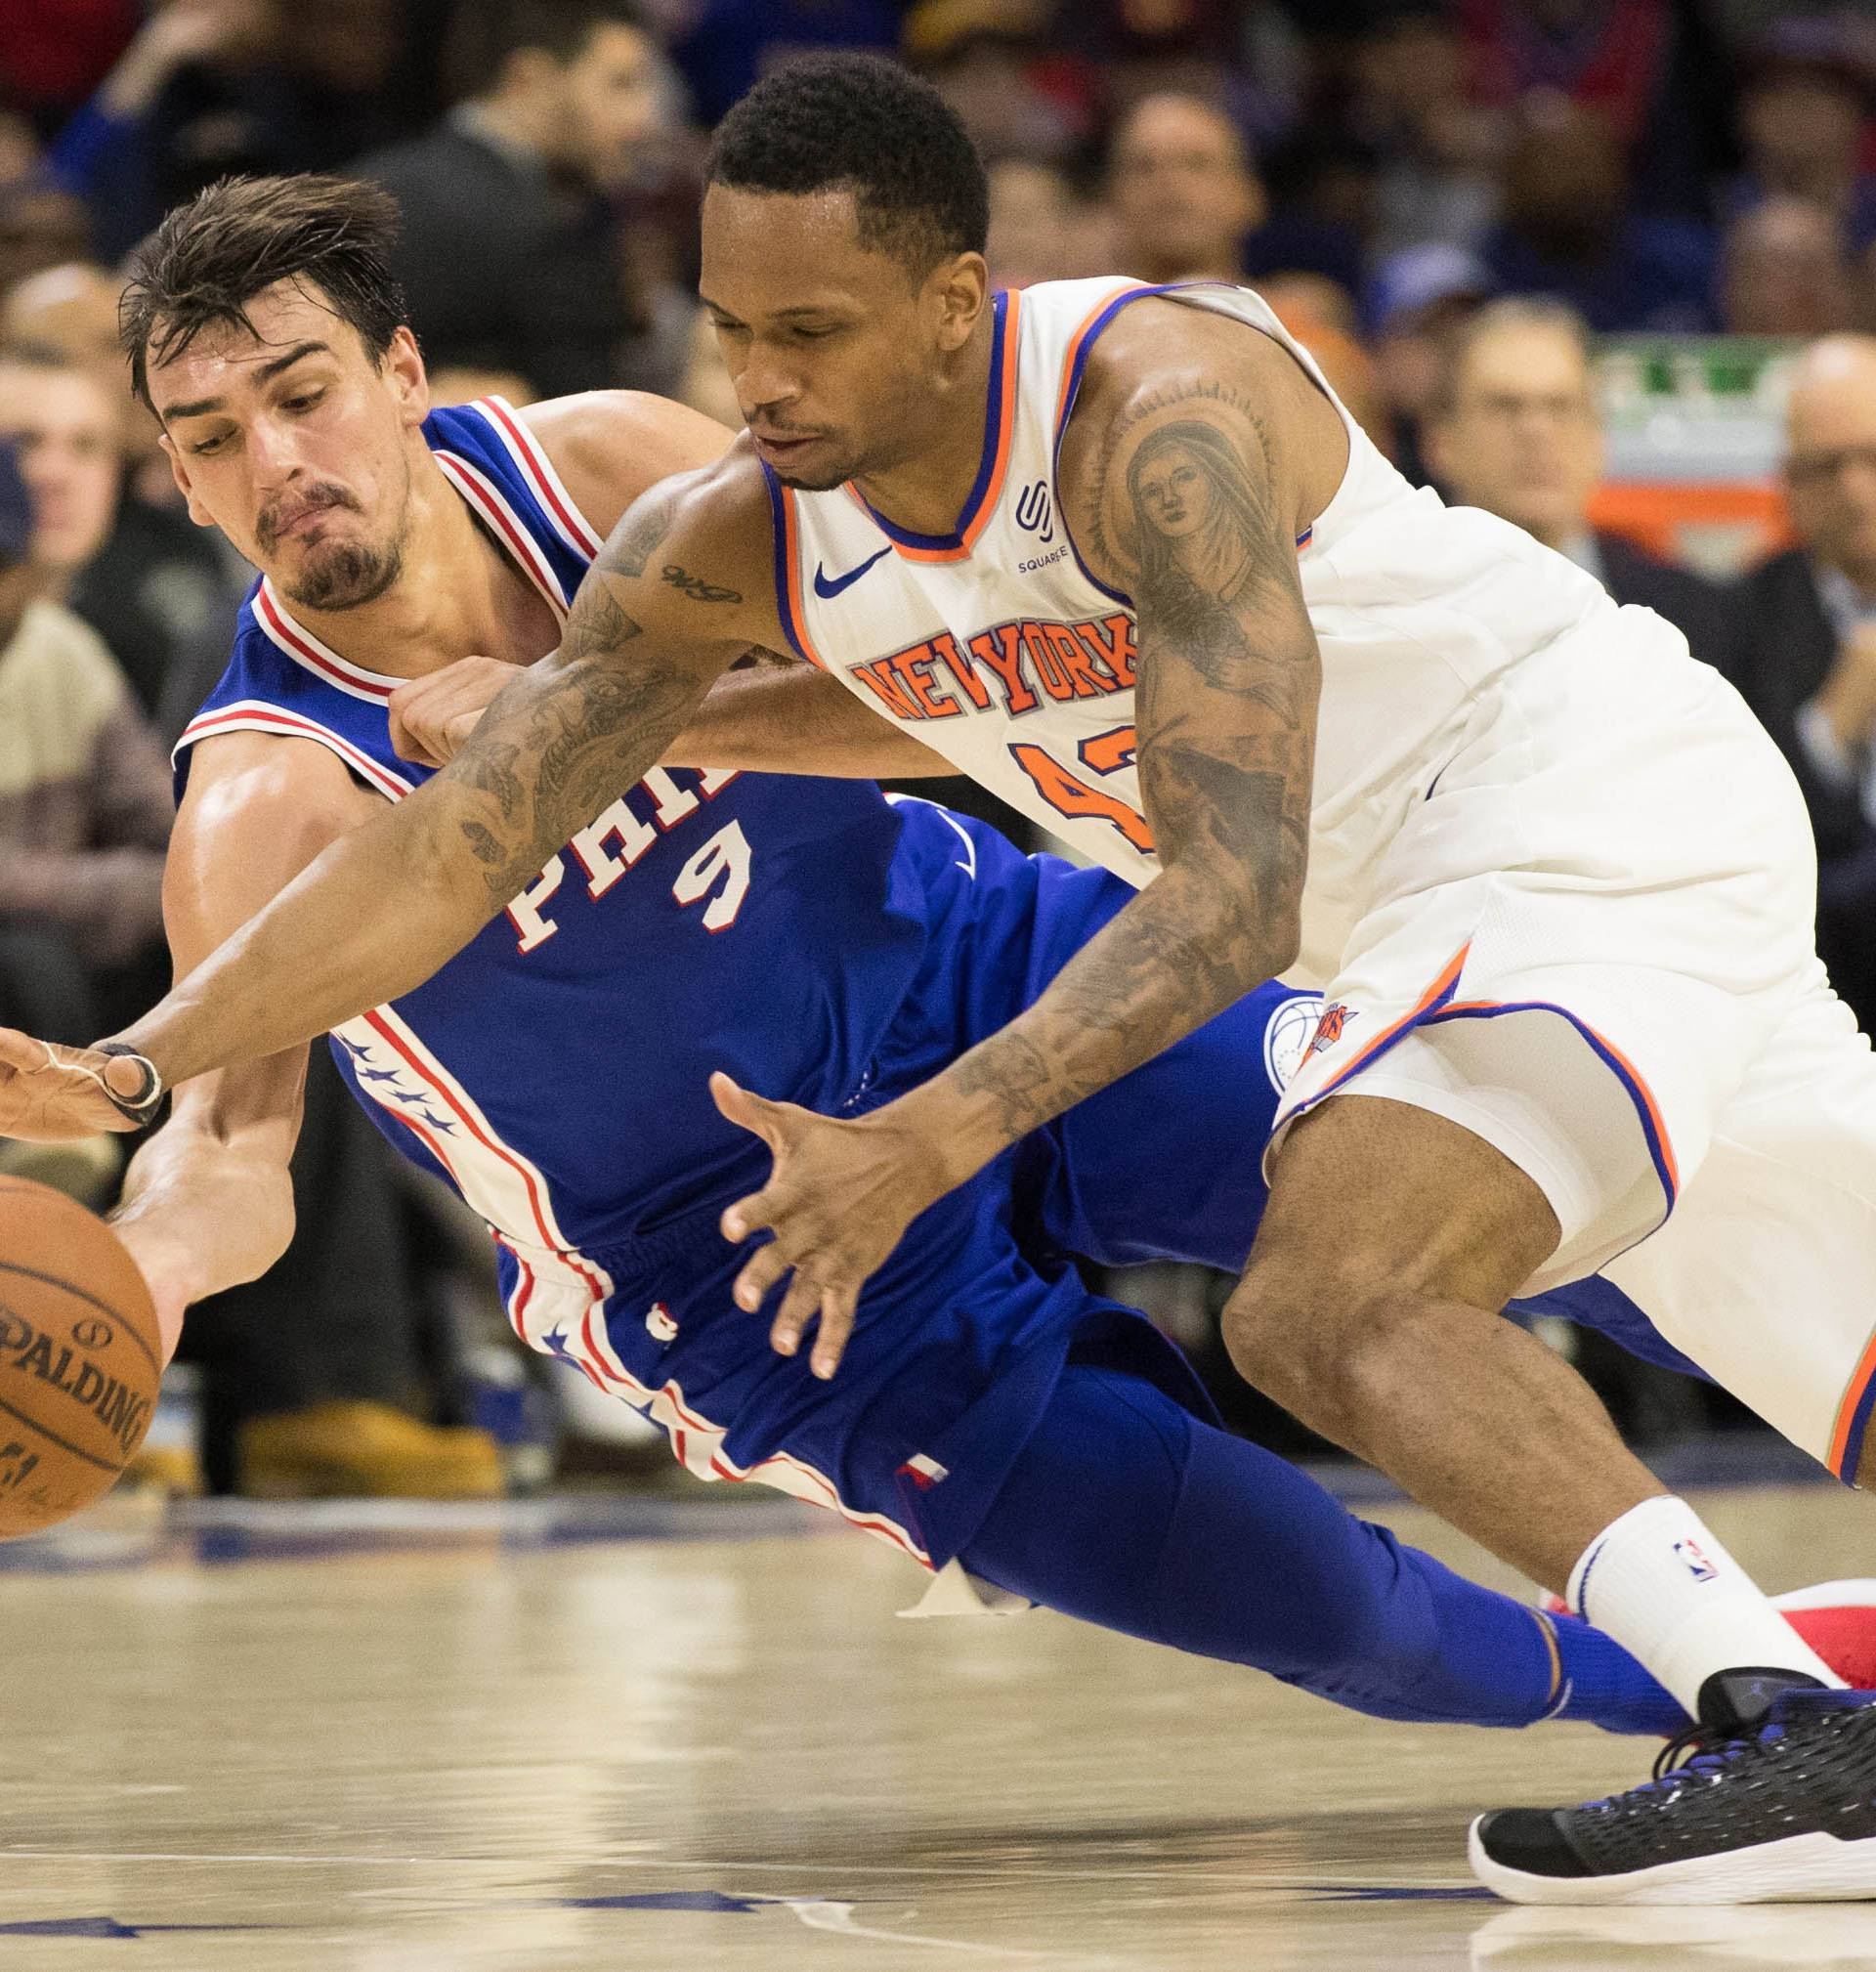 NBA: New York Knicks at Philadelphia 76ers